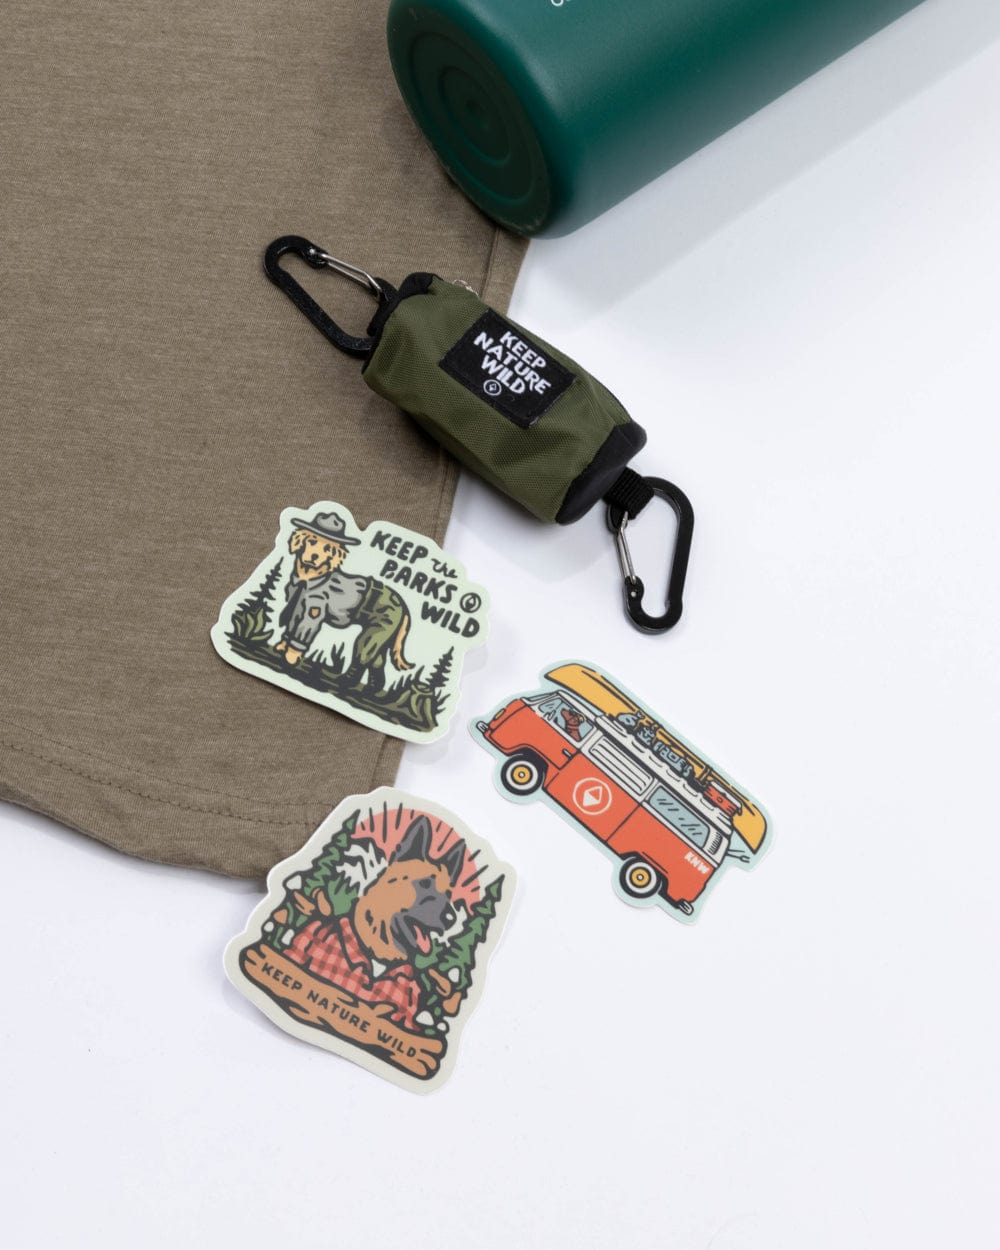 Keep Nature Wild Tee Dog Tee + Dog Sticker 9-Pack Bundle | Keep the Barks Wild Unisex Tee